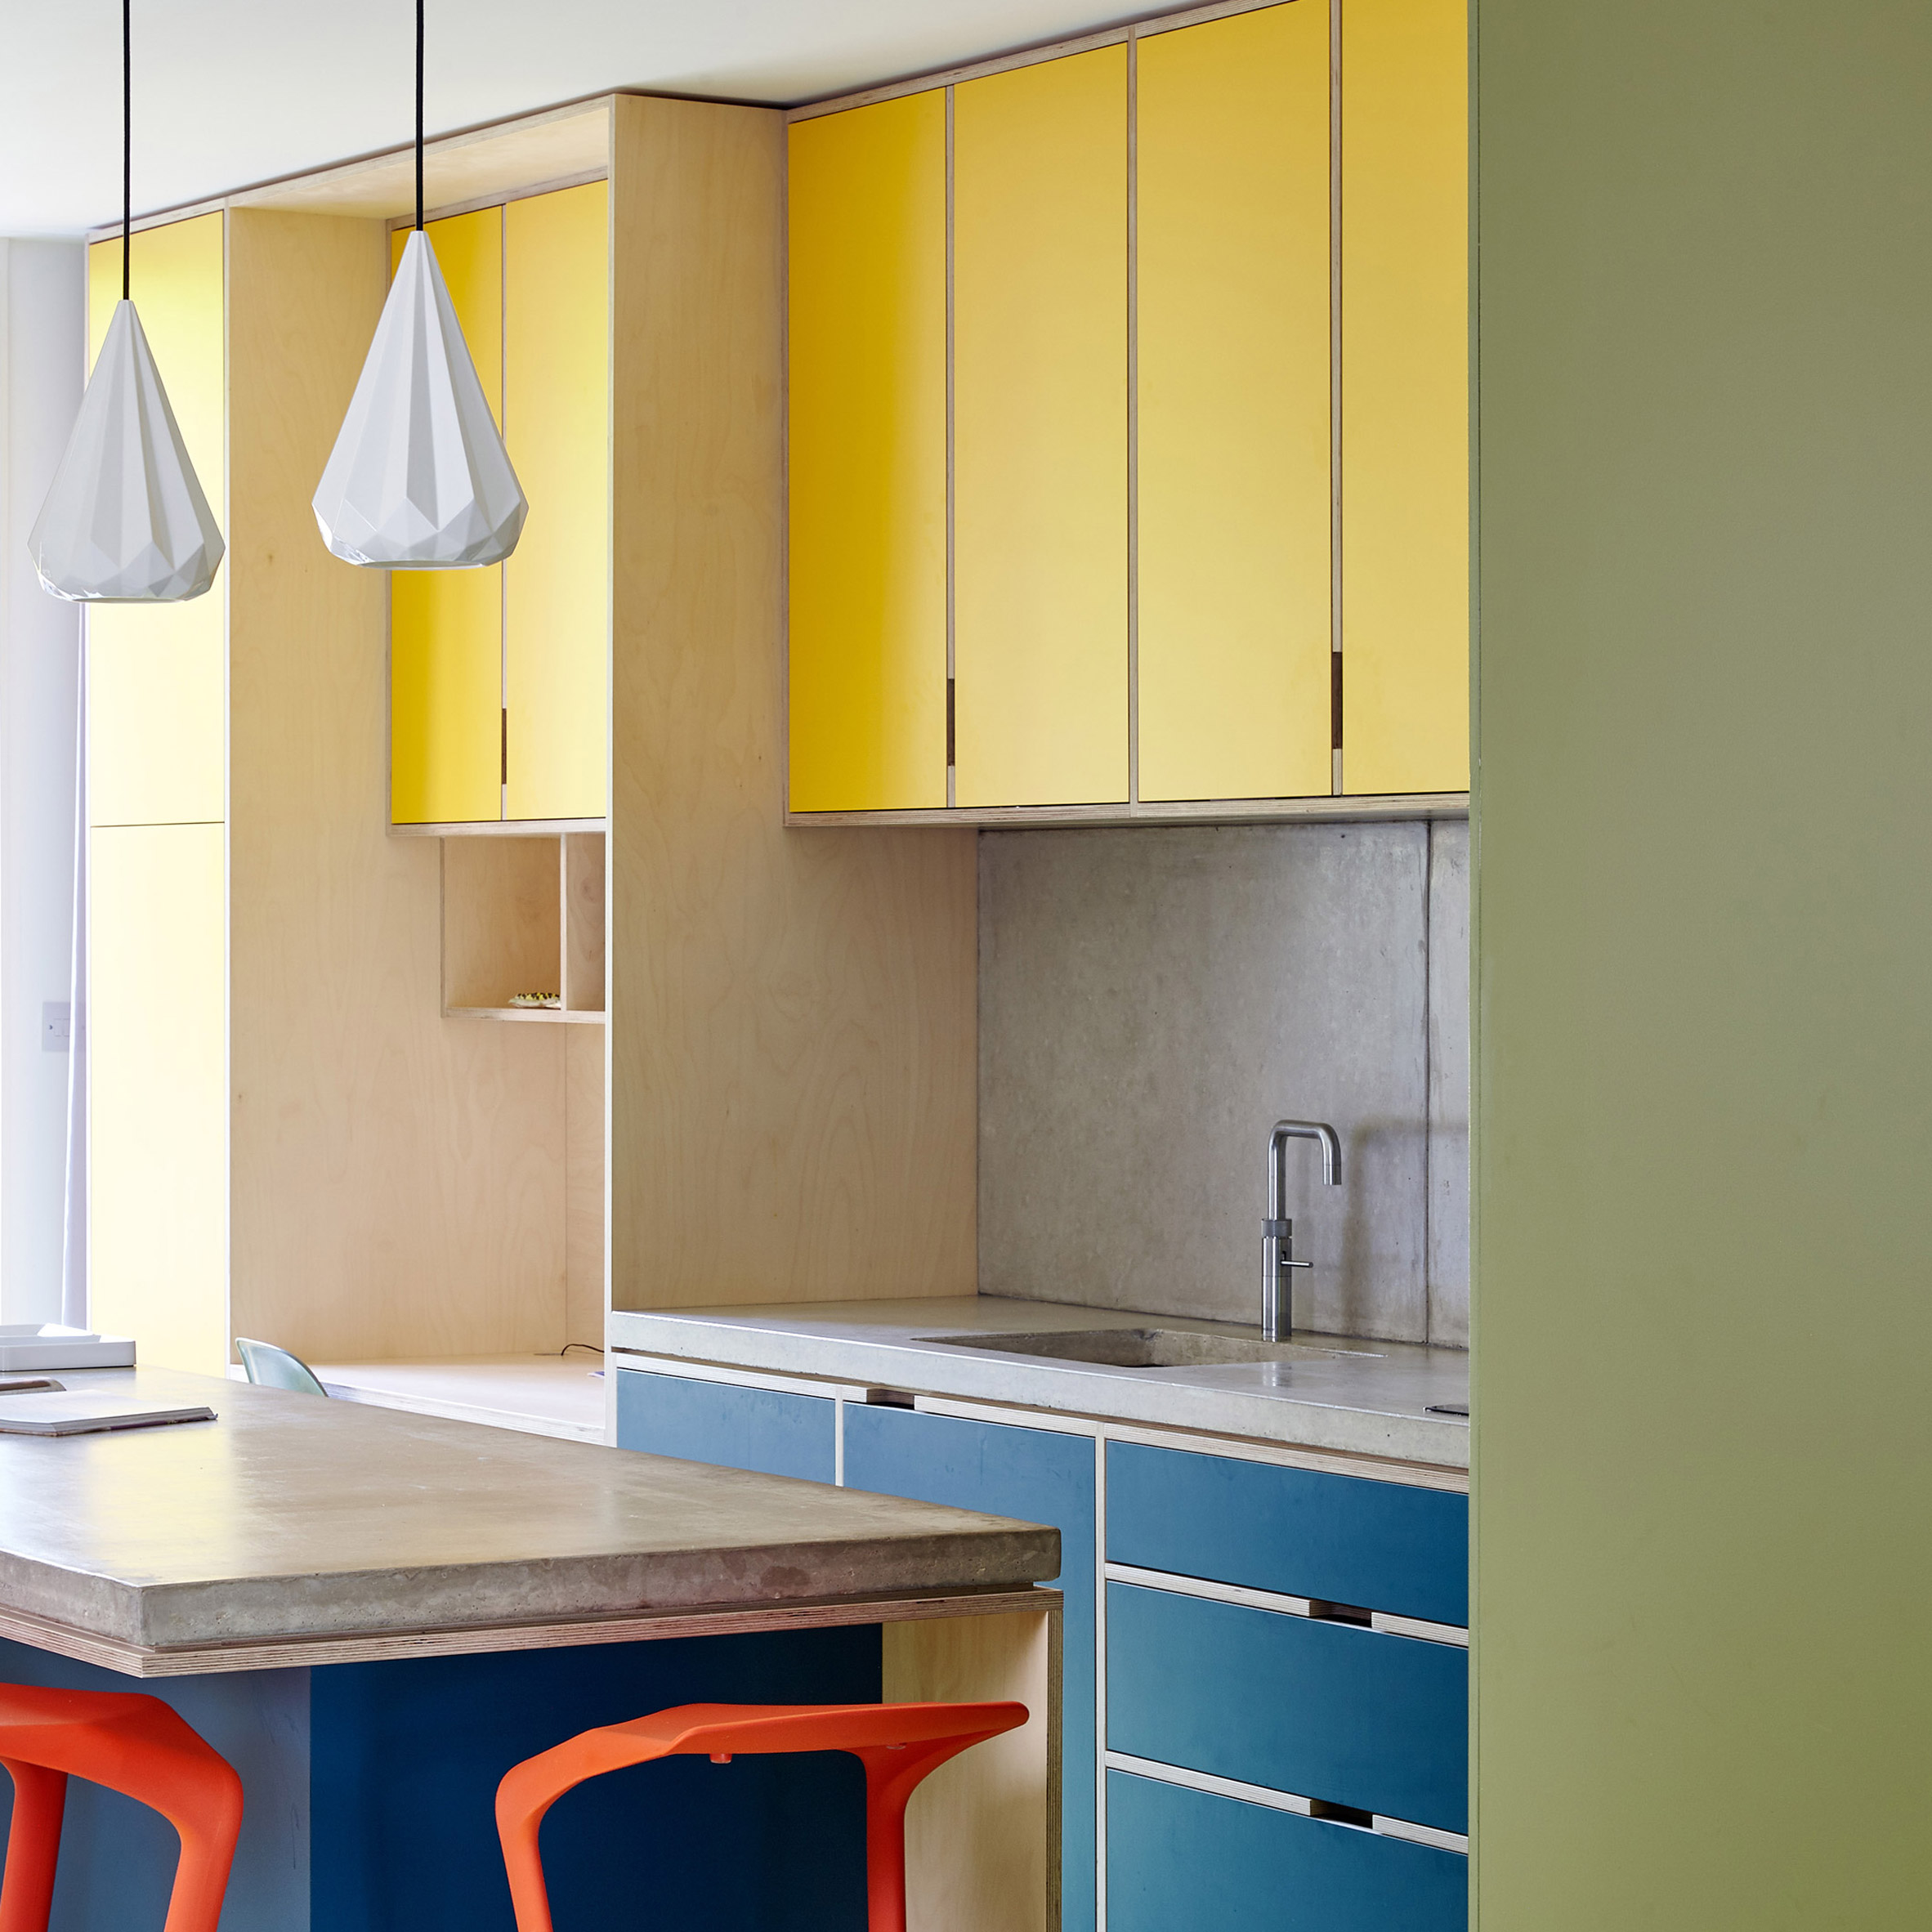 Dezeen roundups: Colour block kitchens